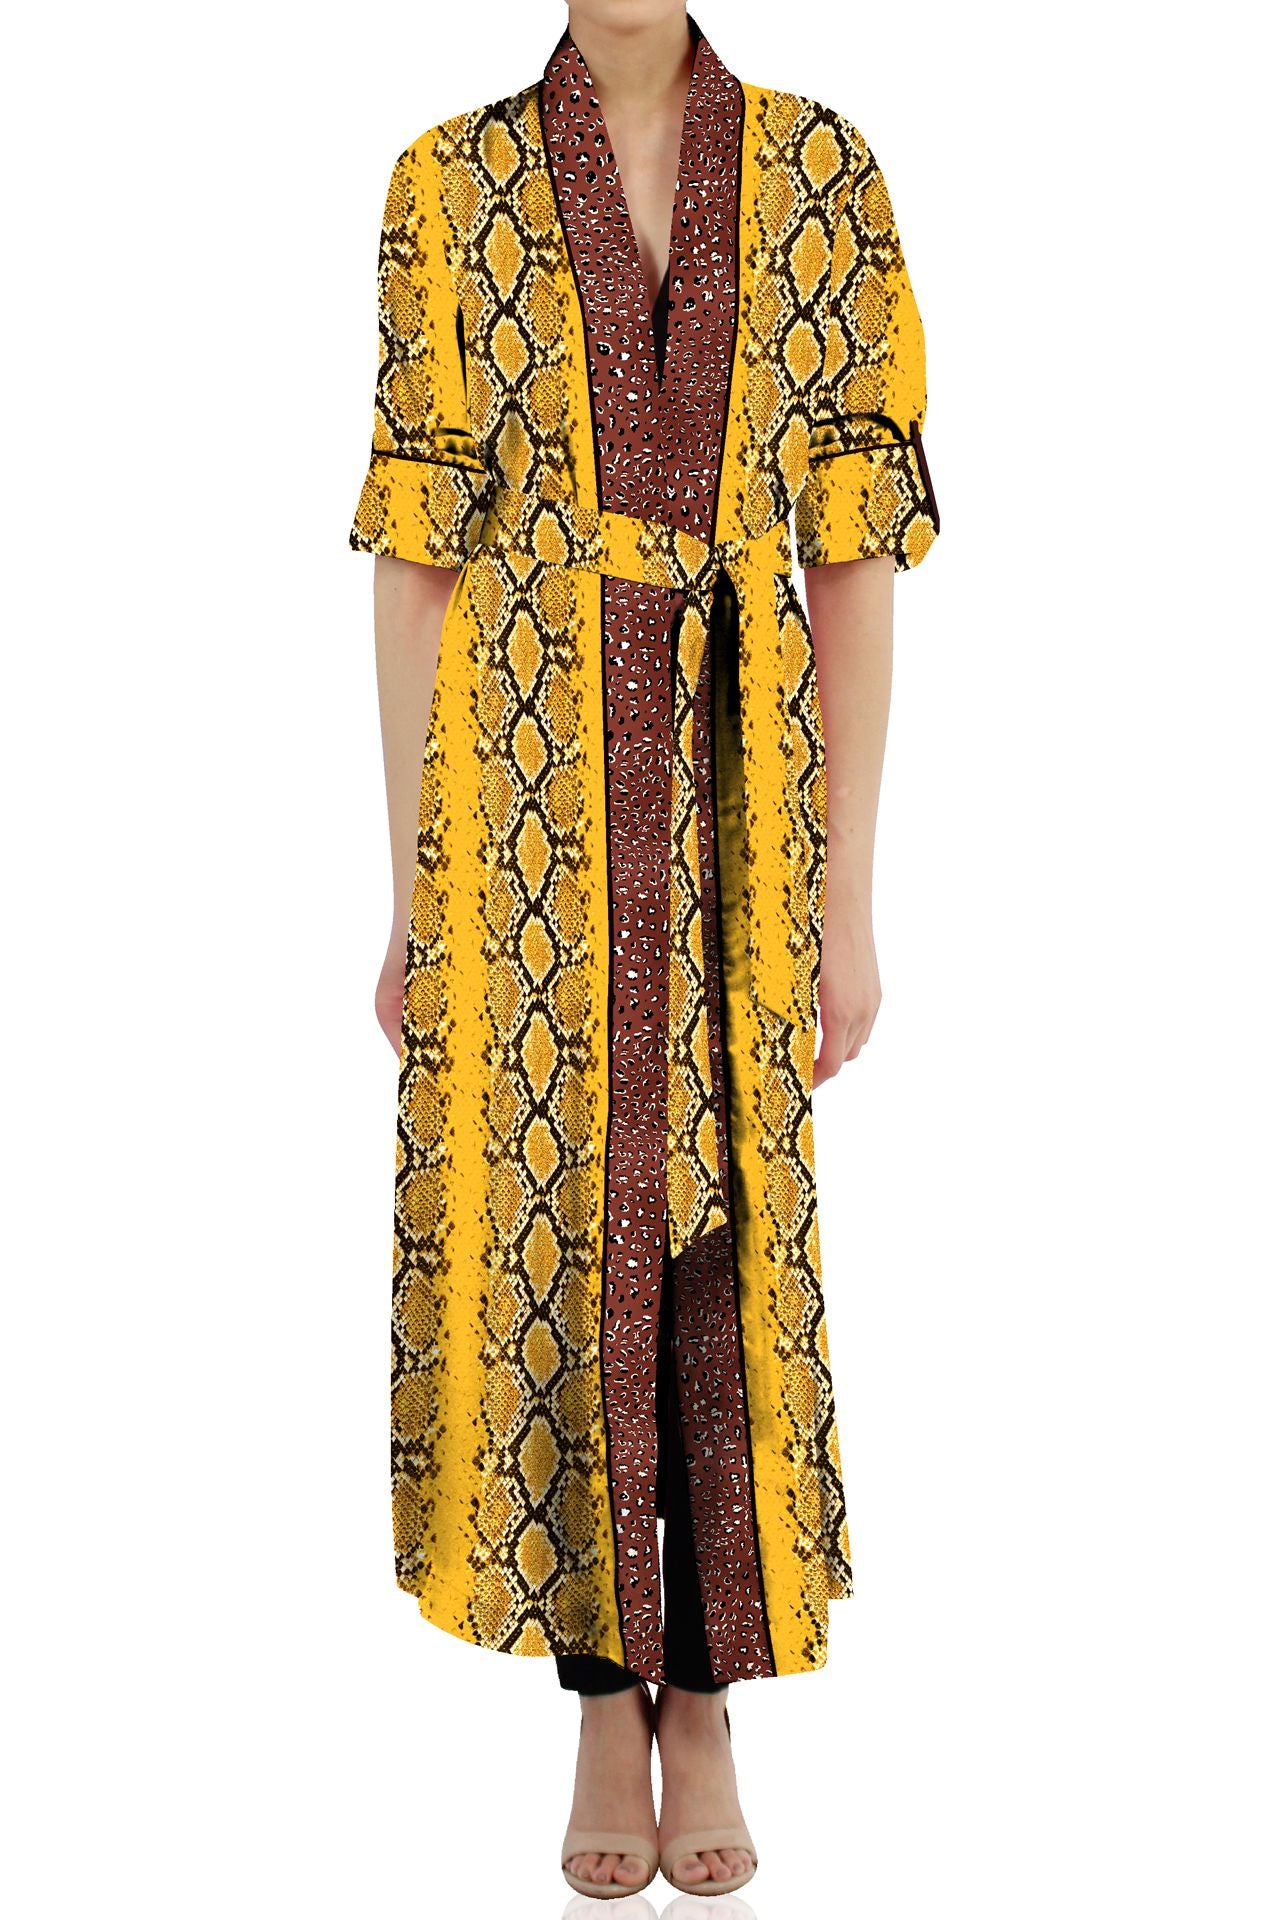 Robe Dress Made with Vegan Silk in  Golden Cob